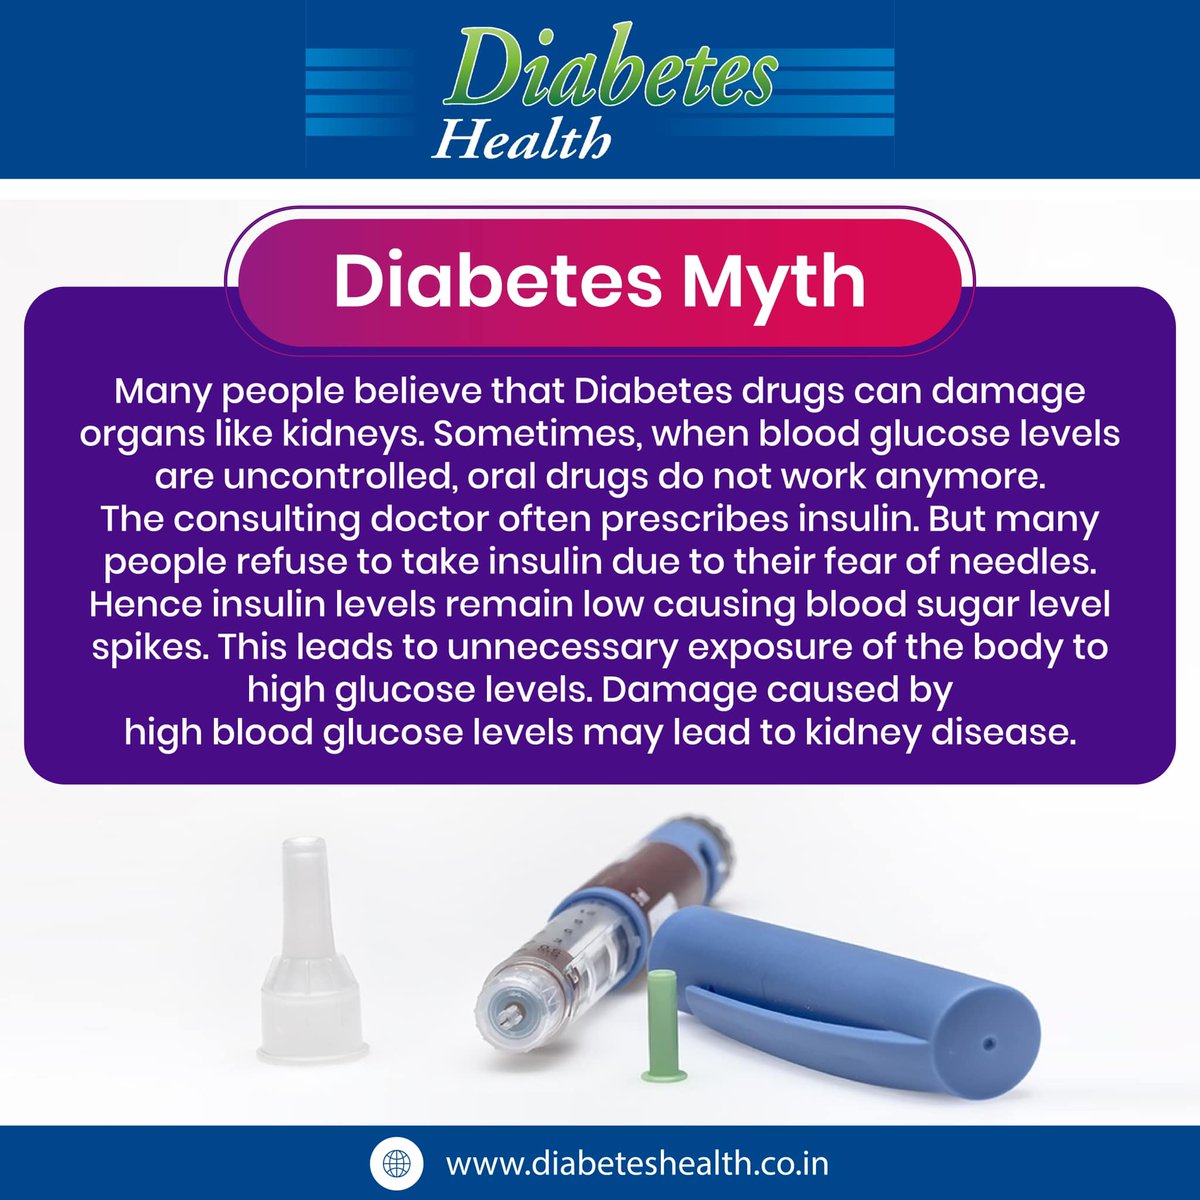 #diabeteshealthmagazine #healthcare #insulin #HighBloodGlucose #kidneydisease #diabetes #diabetesmanagement #DiabetesMyths #t1d #t2d